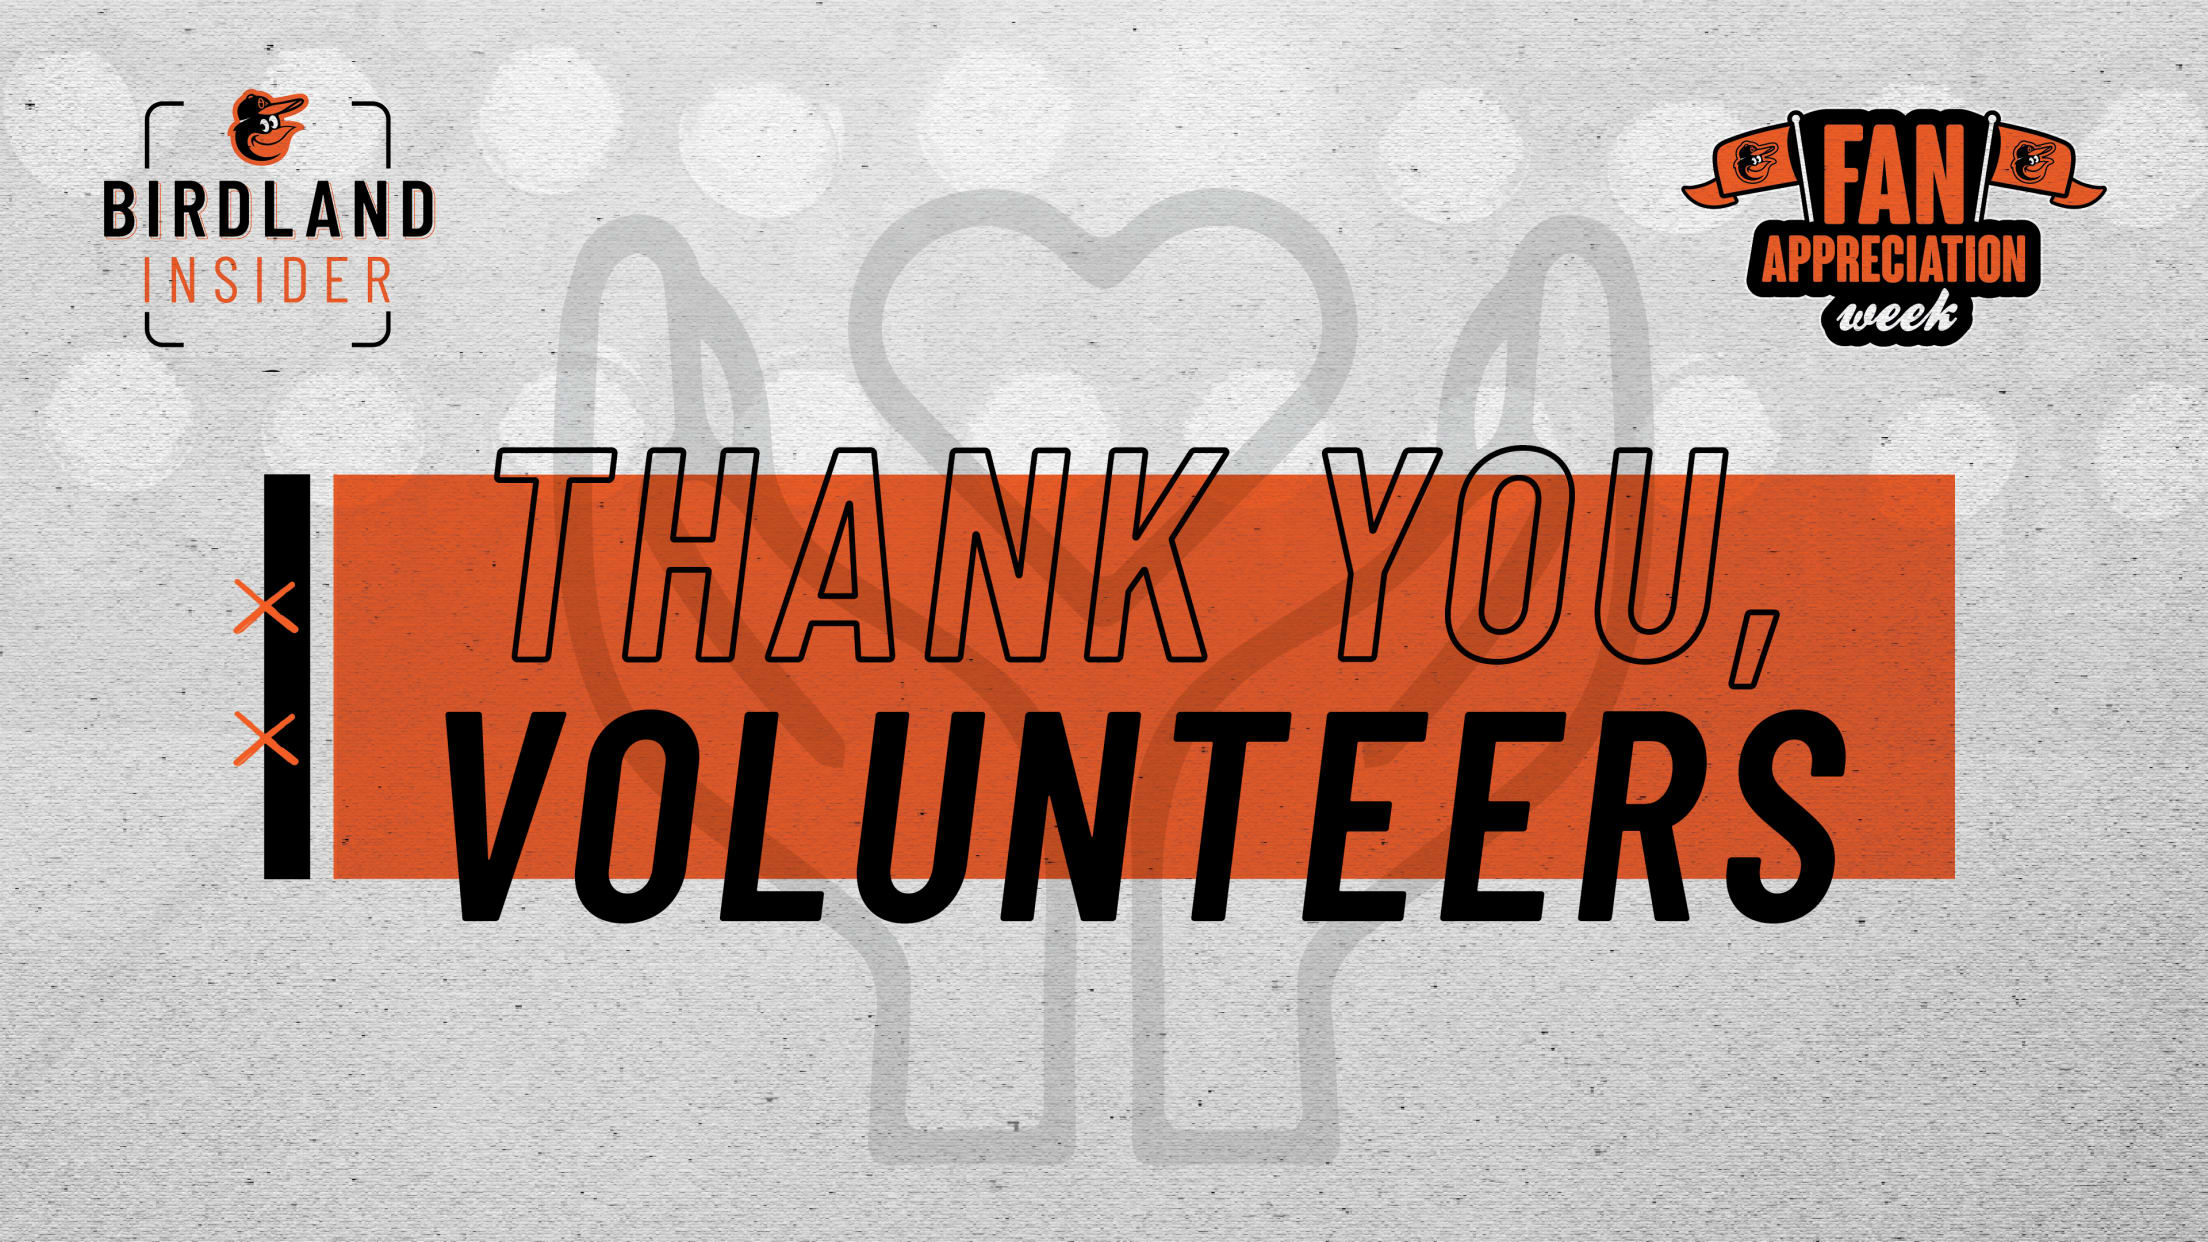 bal-thank-you-volunteers-header